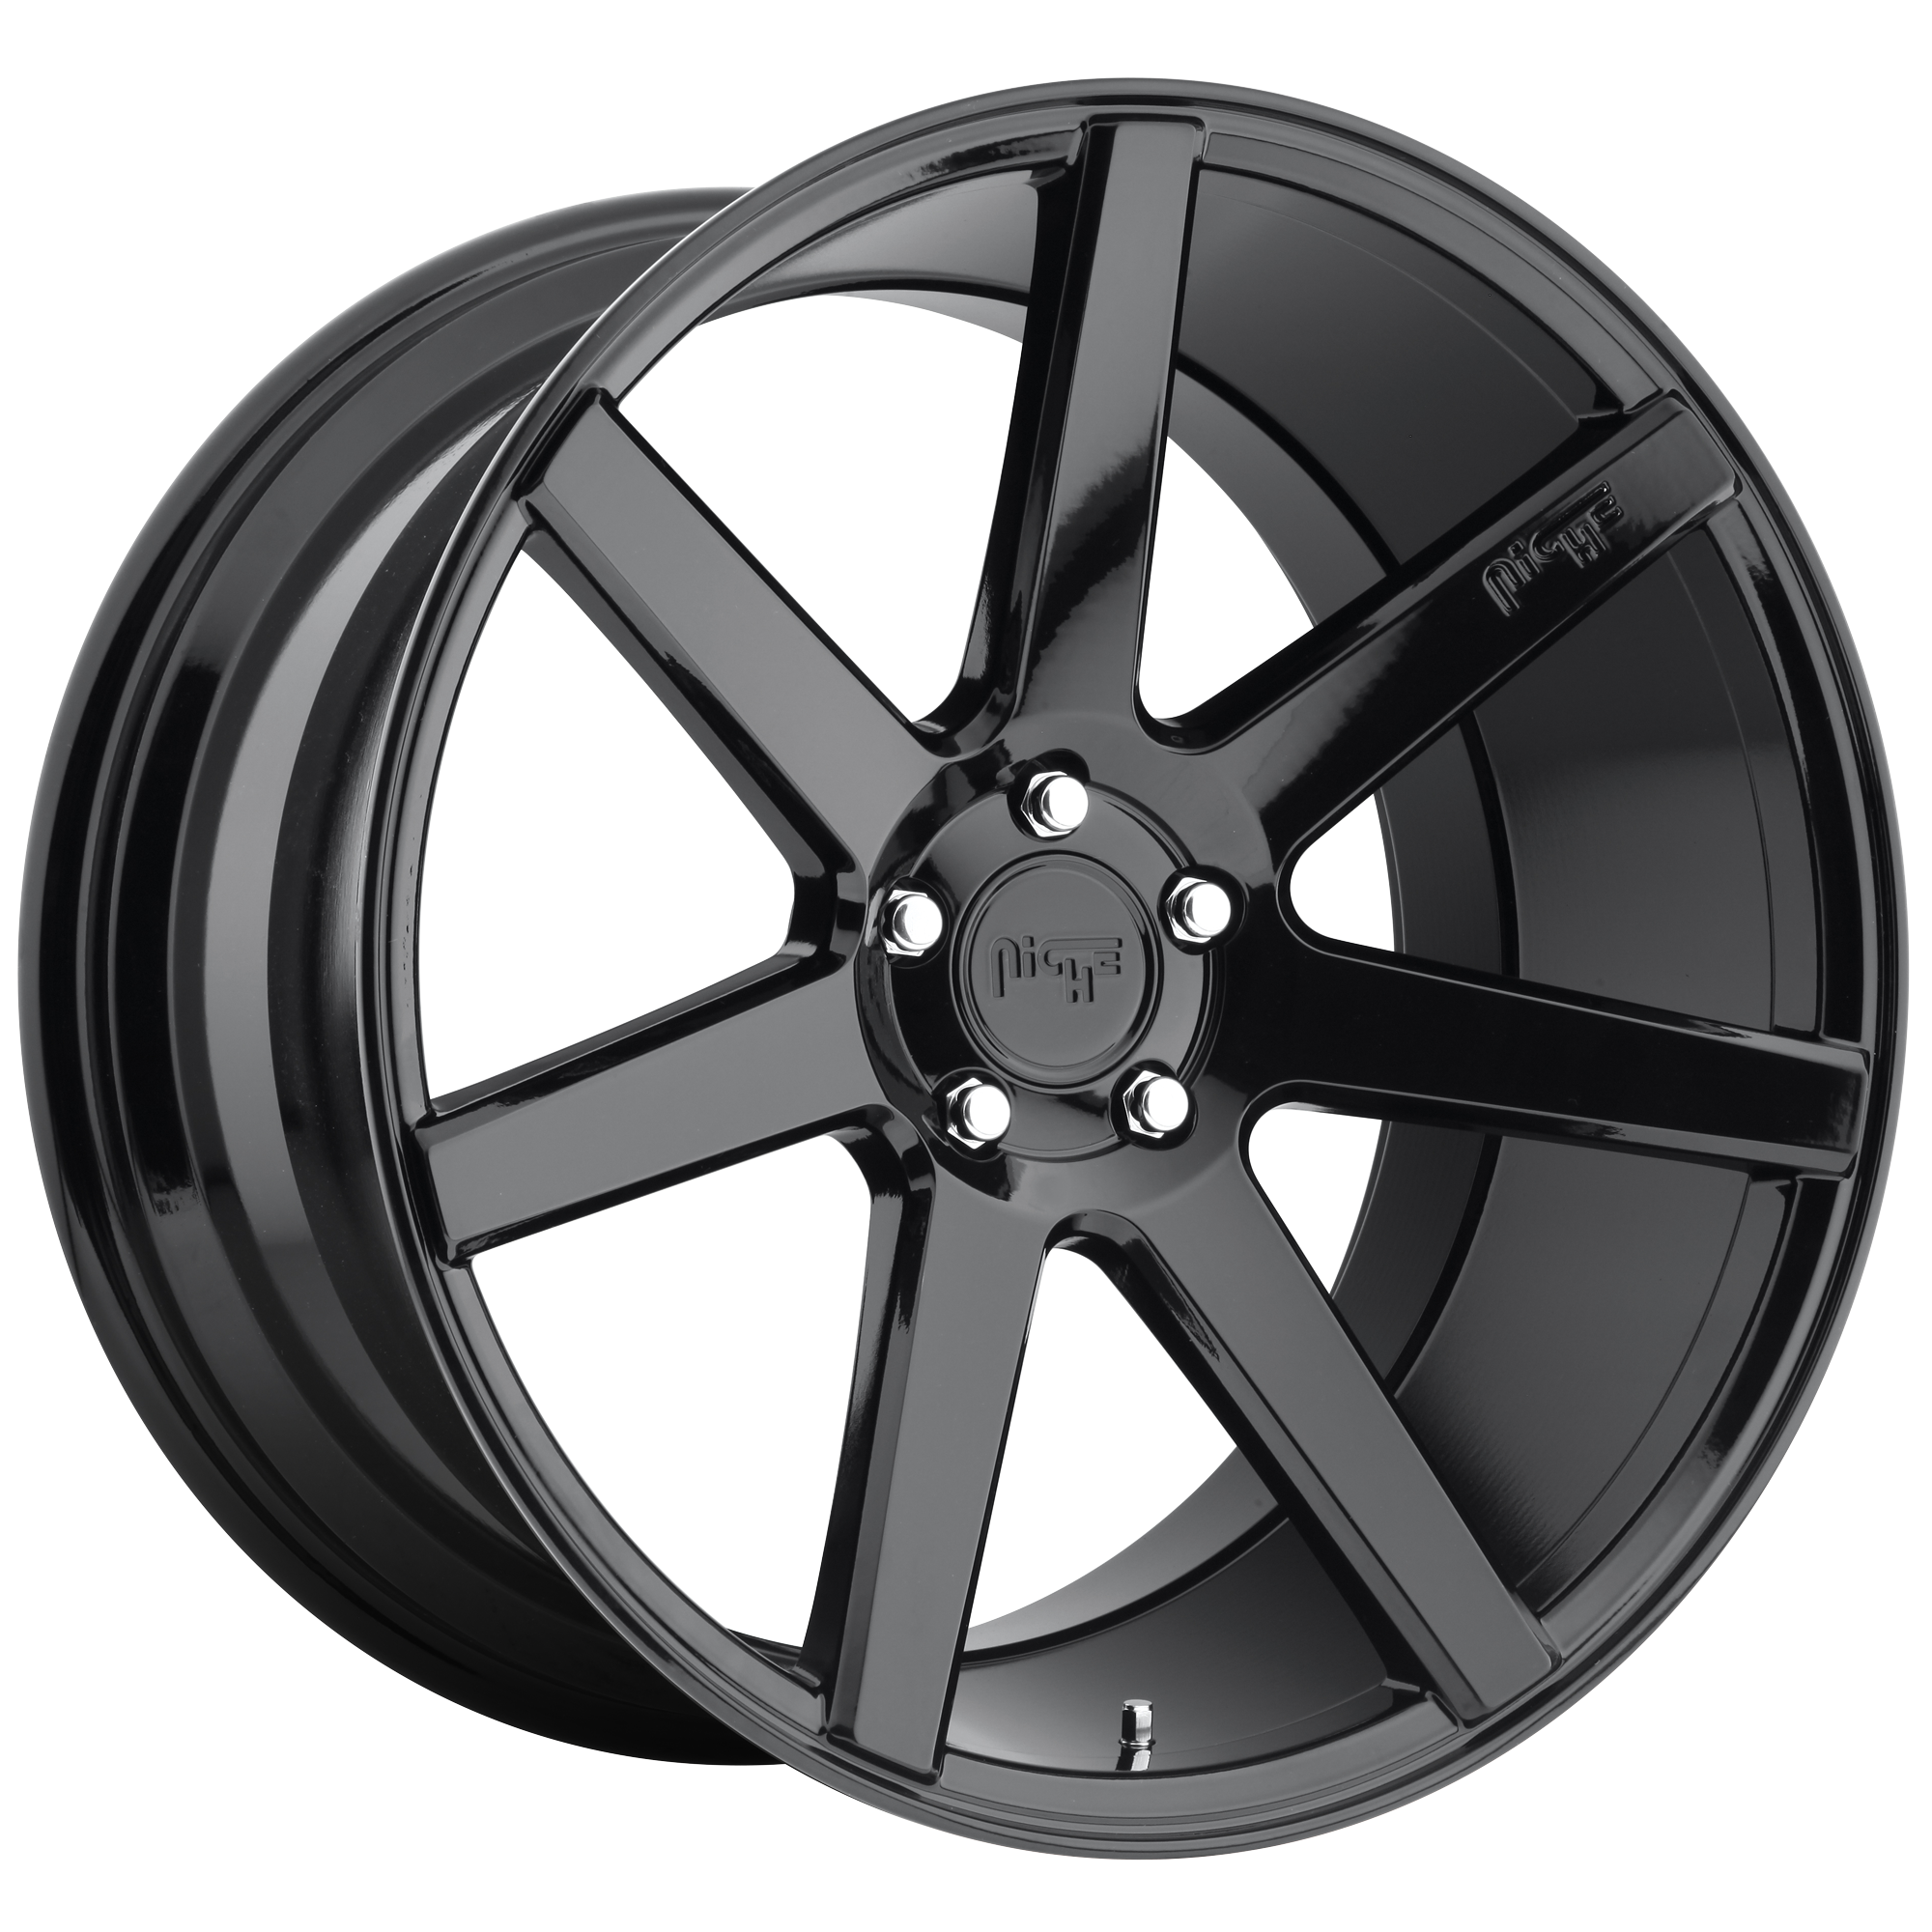 VERONA 20x9 5x112.00 GLOSS BLACK (38 mm) - Tires and Engine Performance